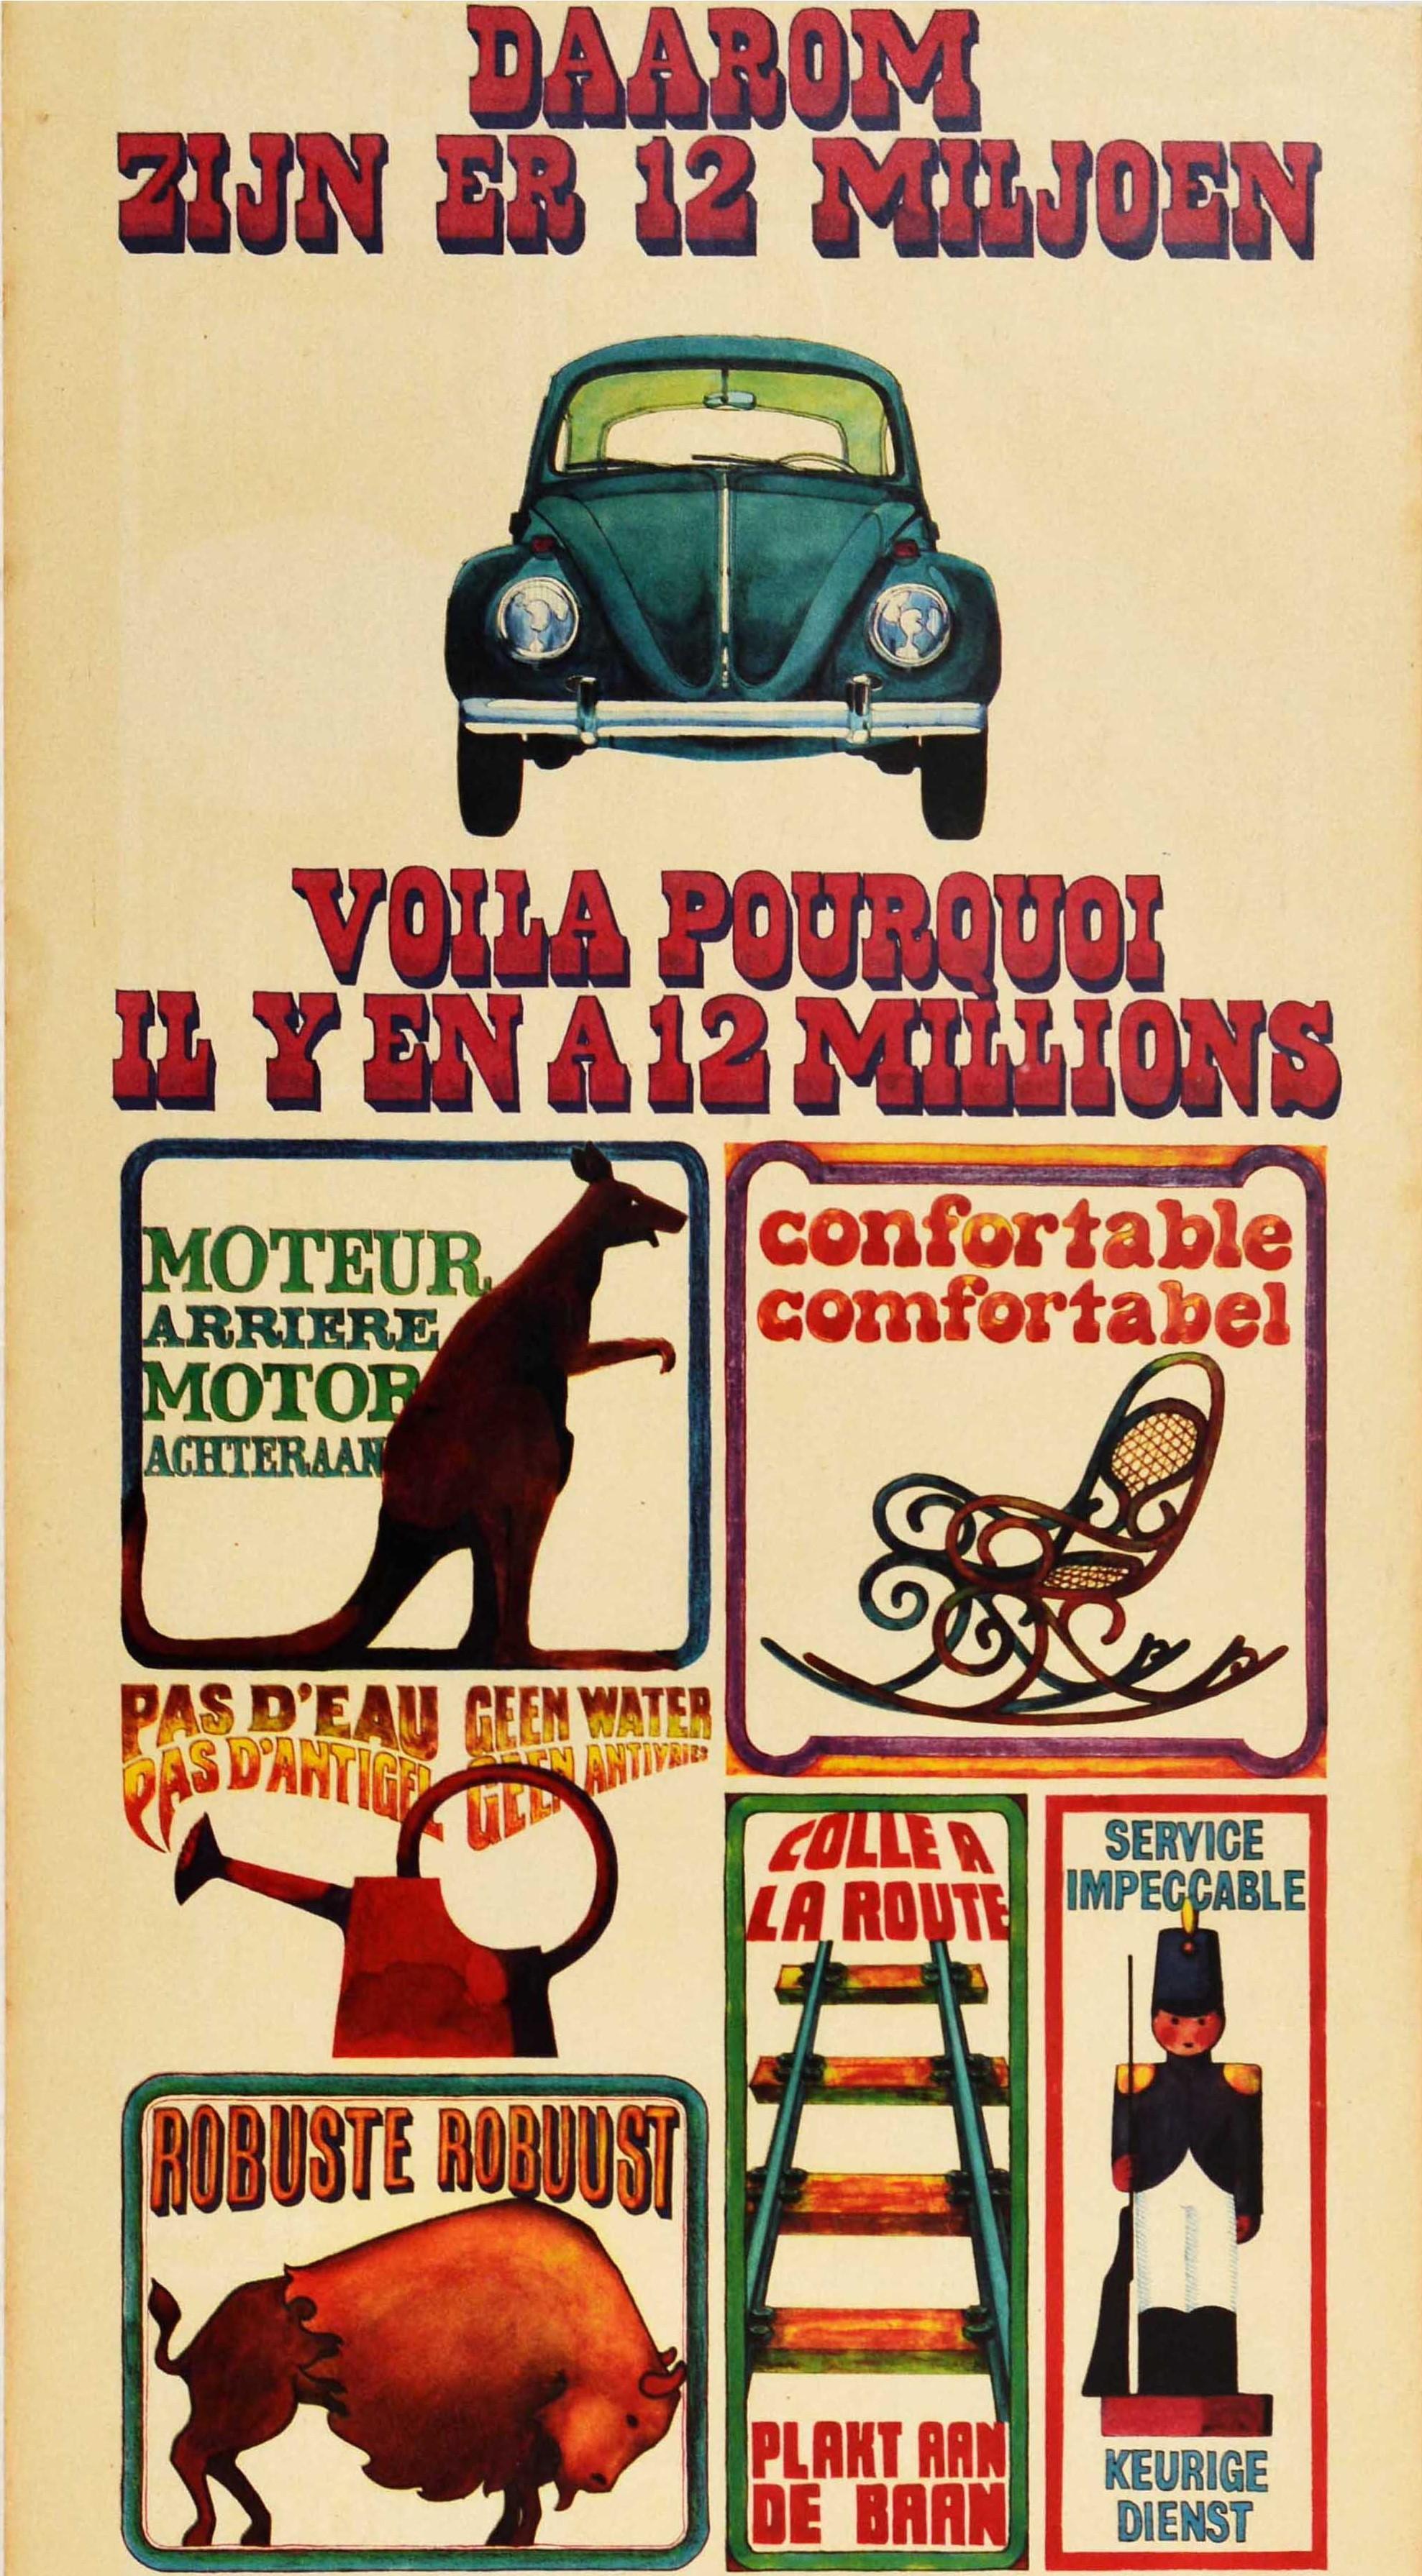 Original Vintage Poster For Volkswagen Beetle 12 Million VW Car Advertising Art - Print by Unknown